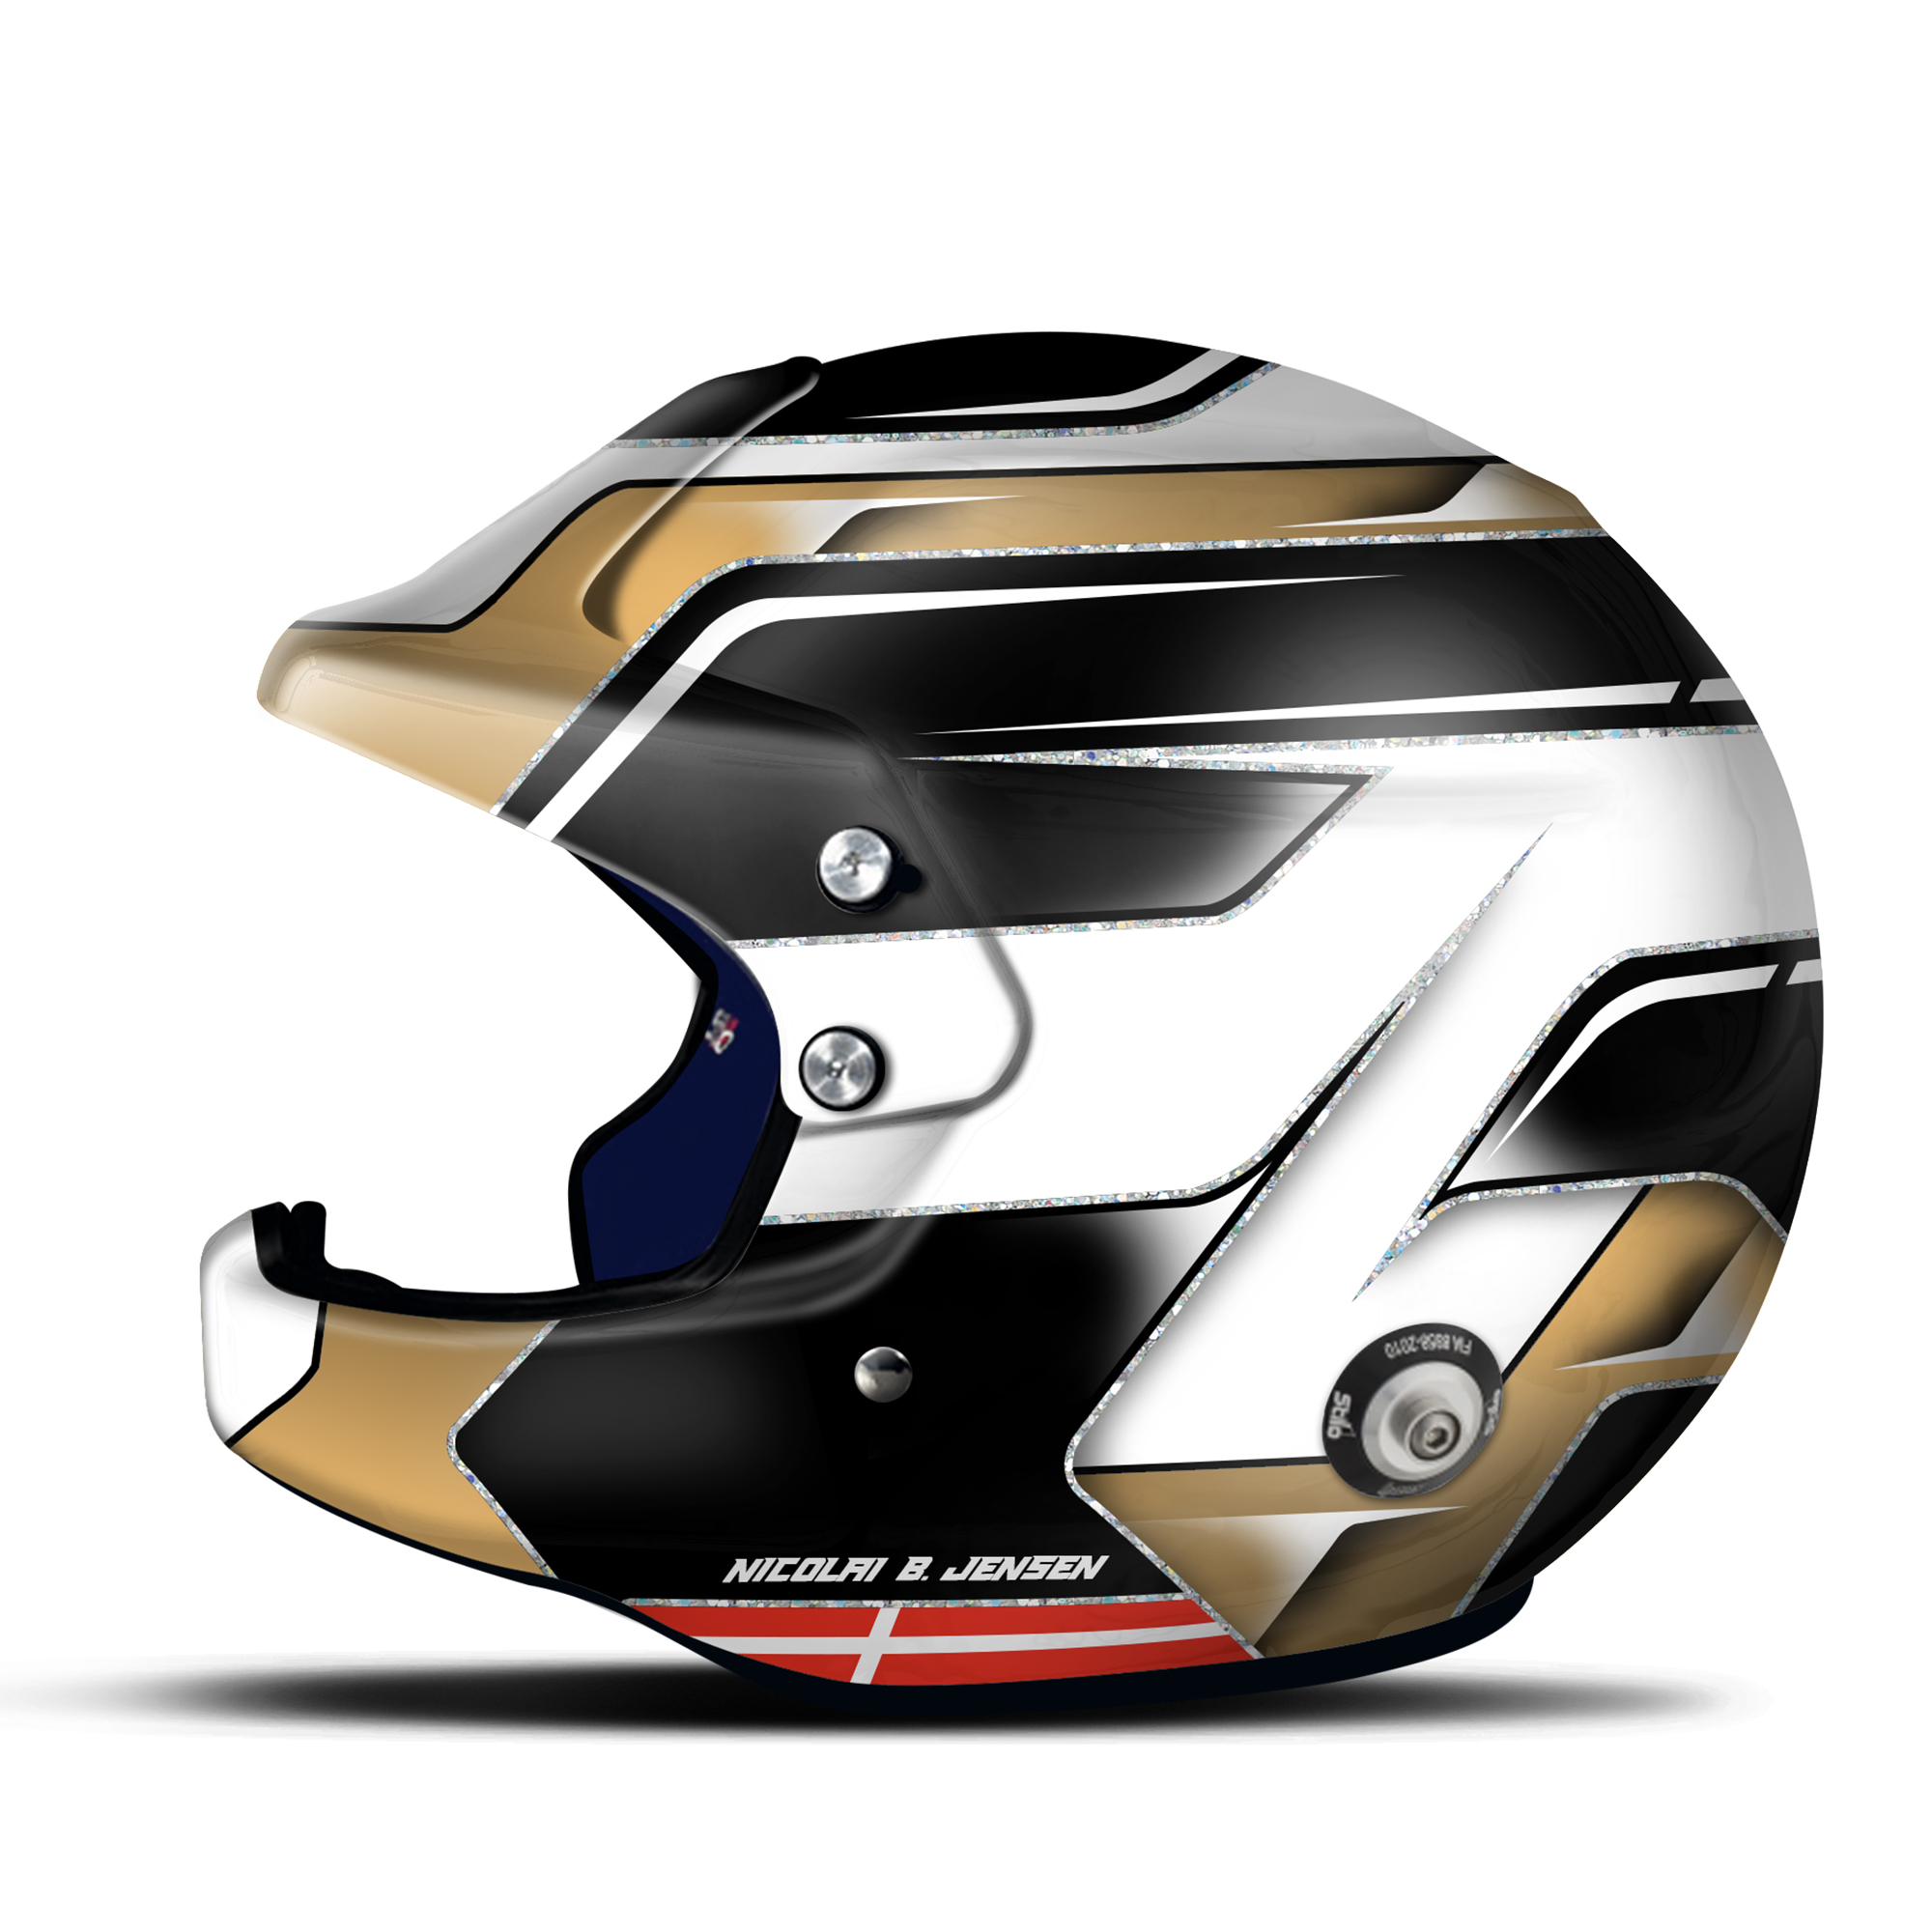 Stilo WRC helmet design